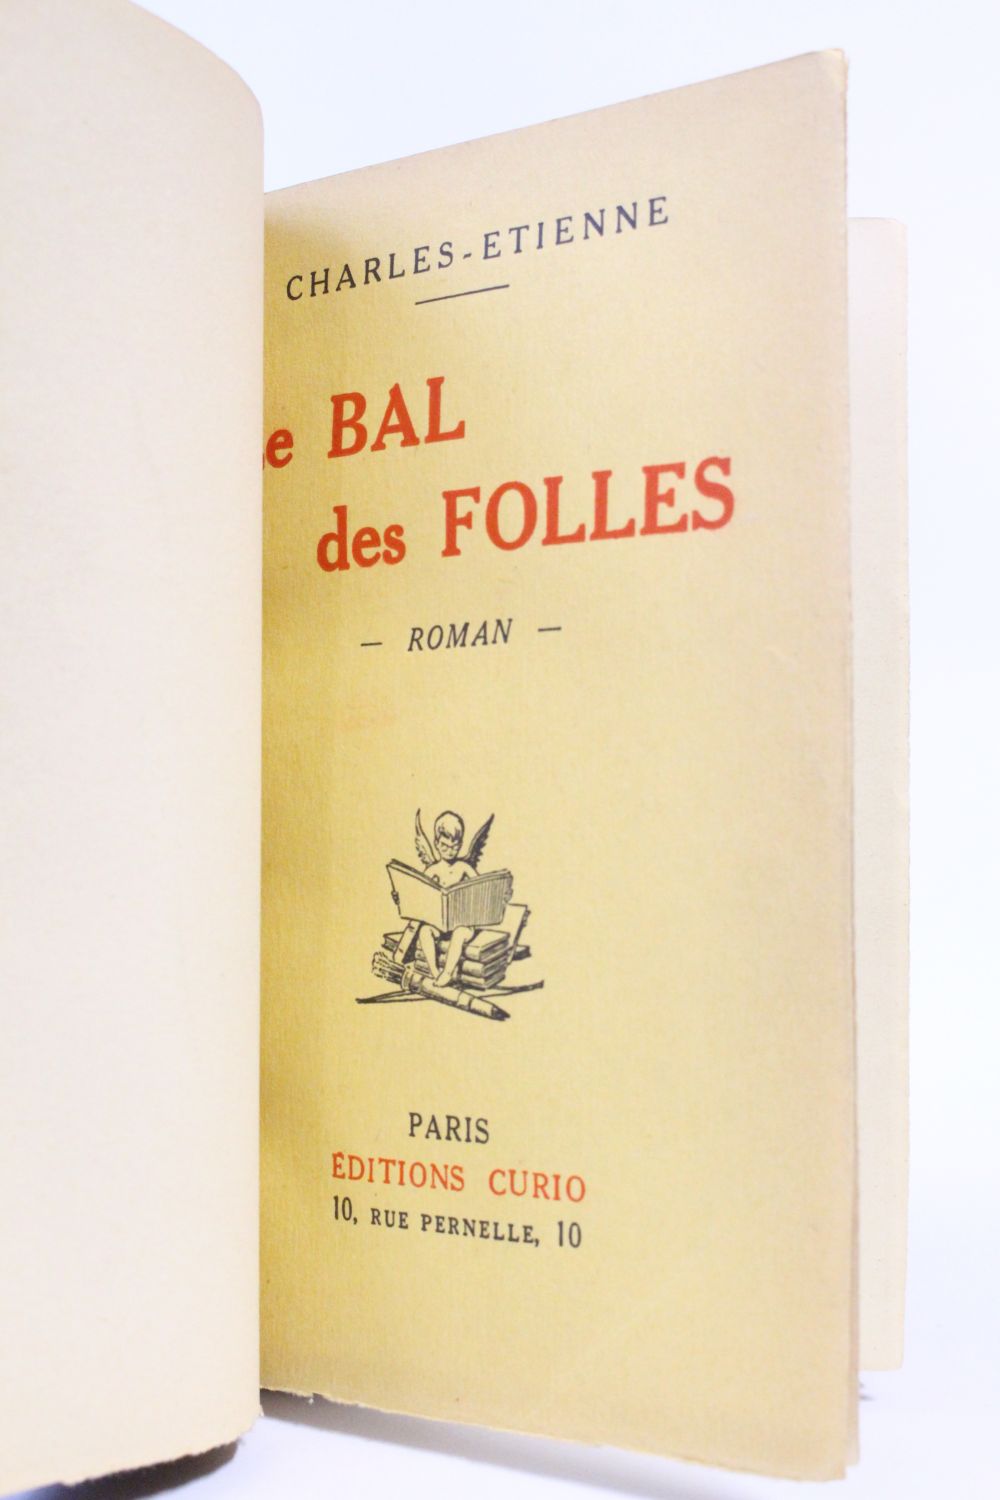 Sets 'Le bal des folles' As First French Original